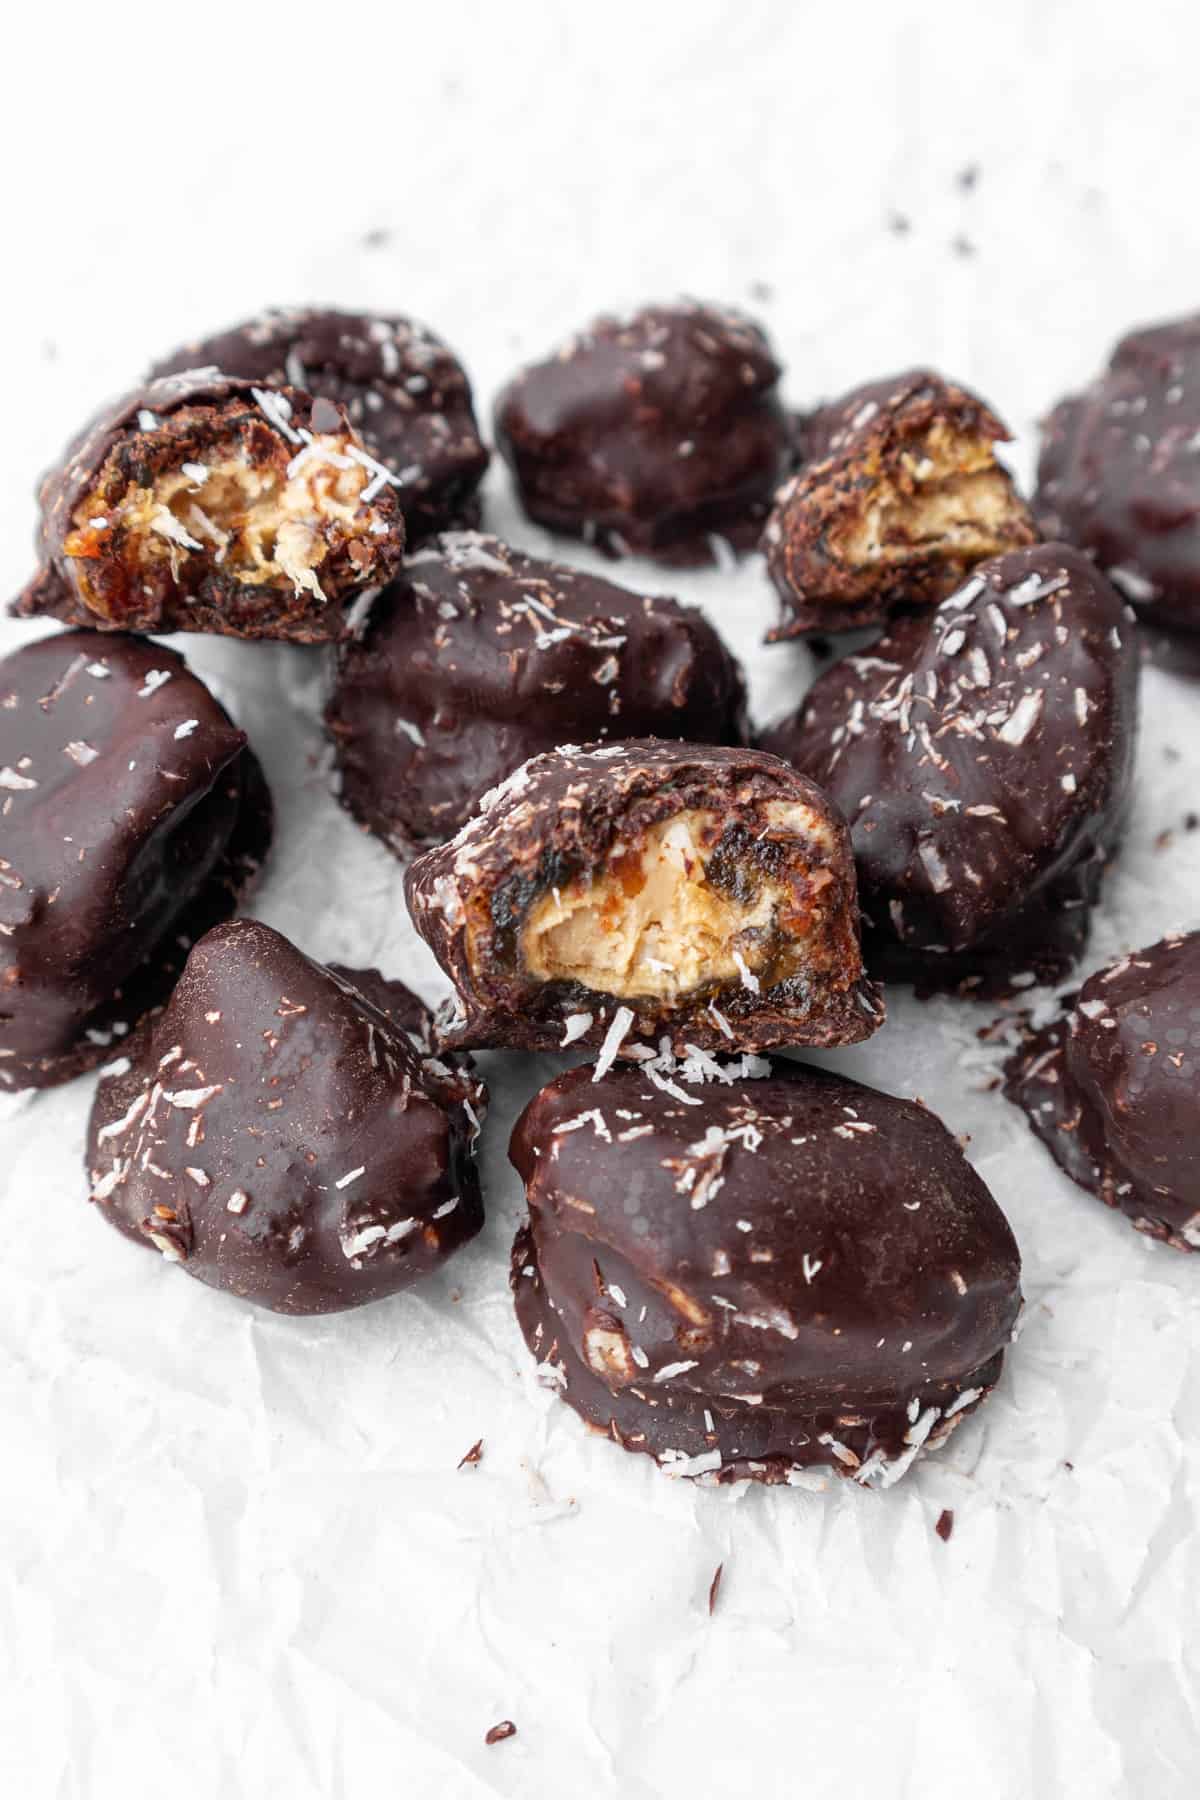 Chocolate covered stuffed dates